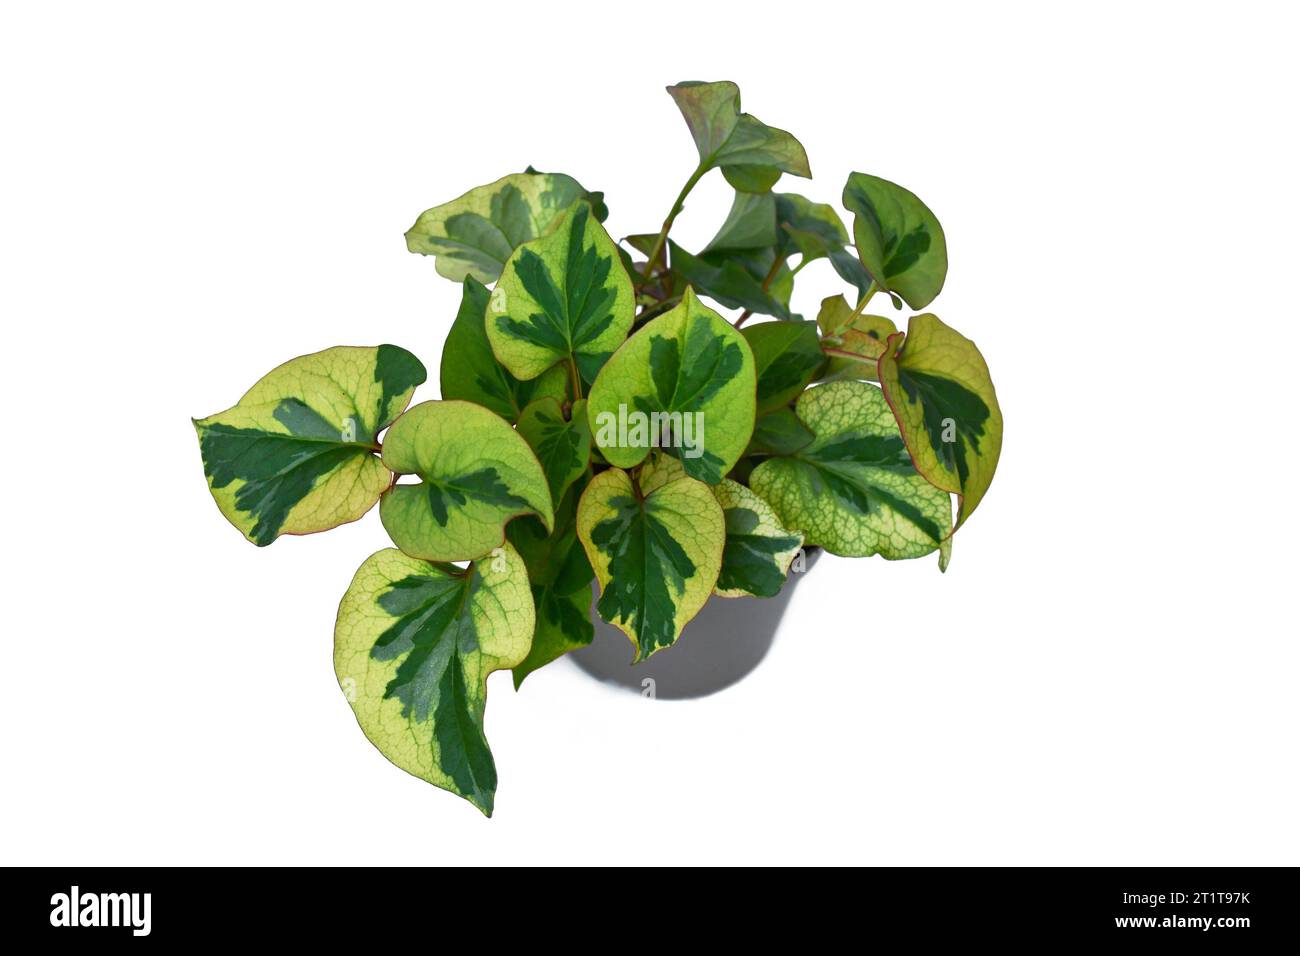 Potted 'Houttuynia Cordata Chameleon' plant on white background Stock Photo